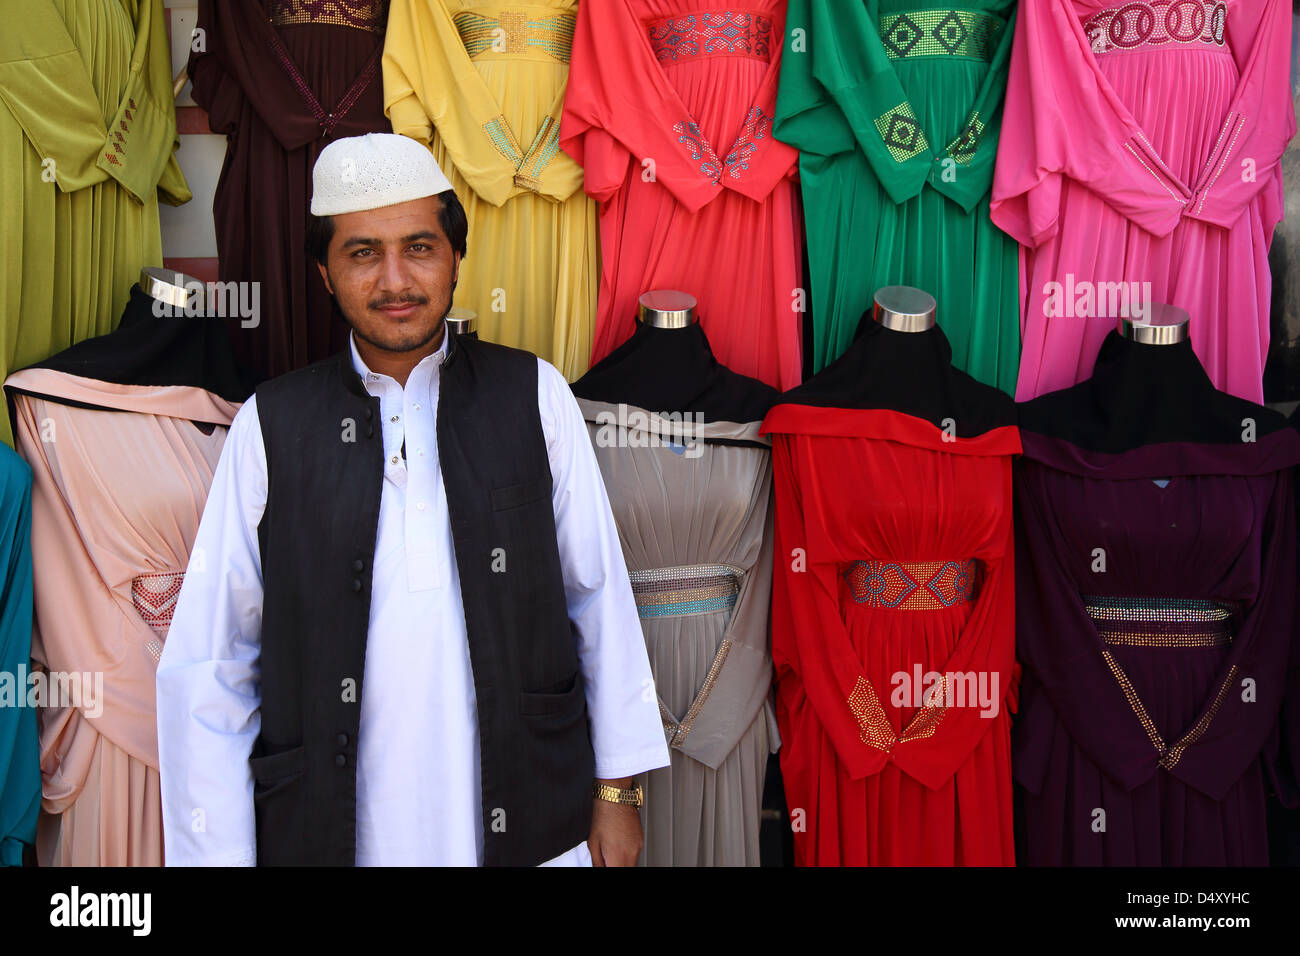 Portrait of shop owner by colorful clothing, Dubai, United Arab Emirates Stock Photo